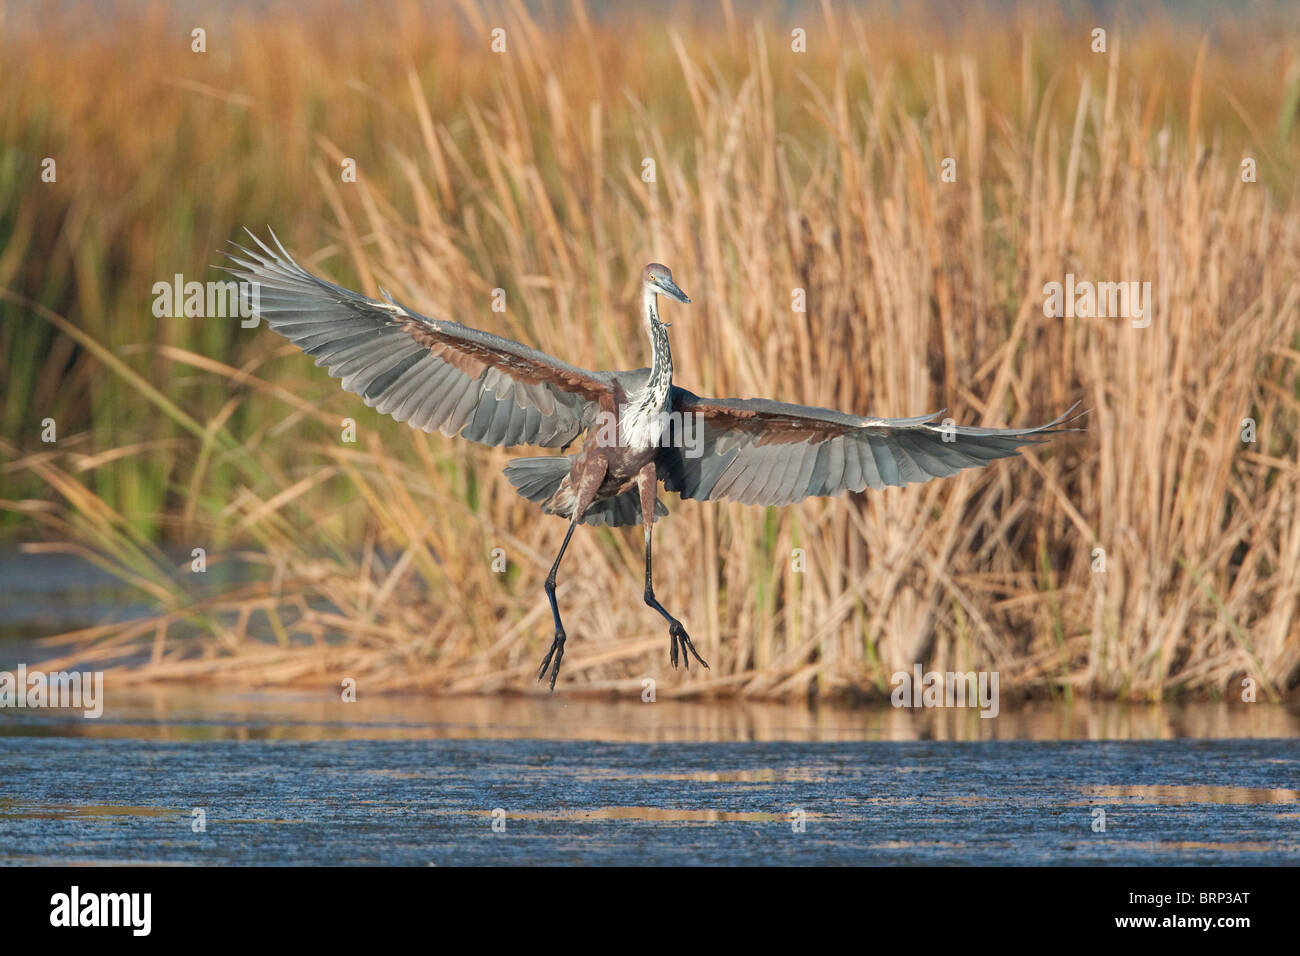 Goliath Heron in flight over water Stock Photo